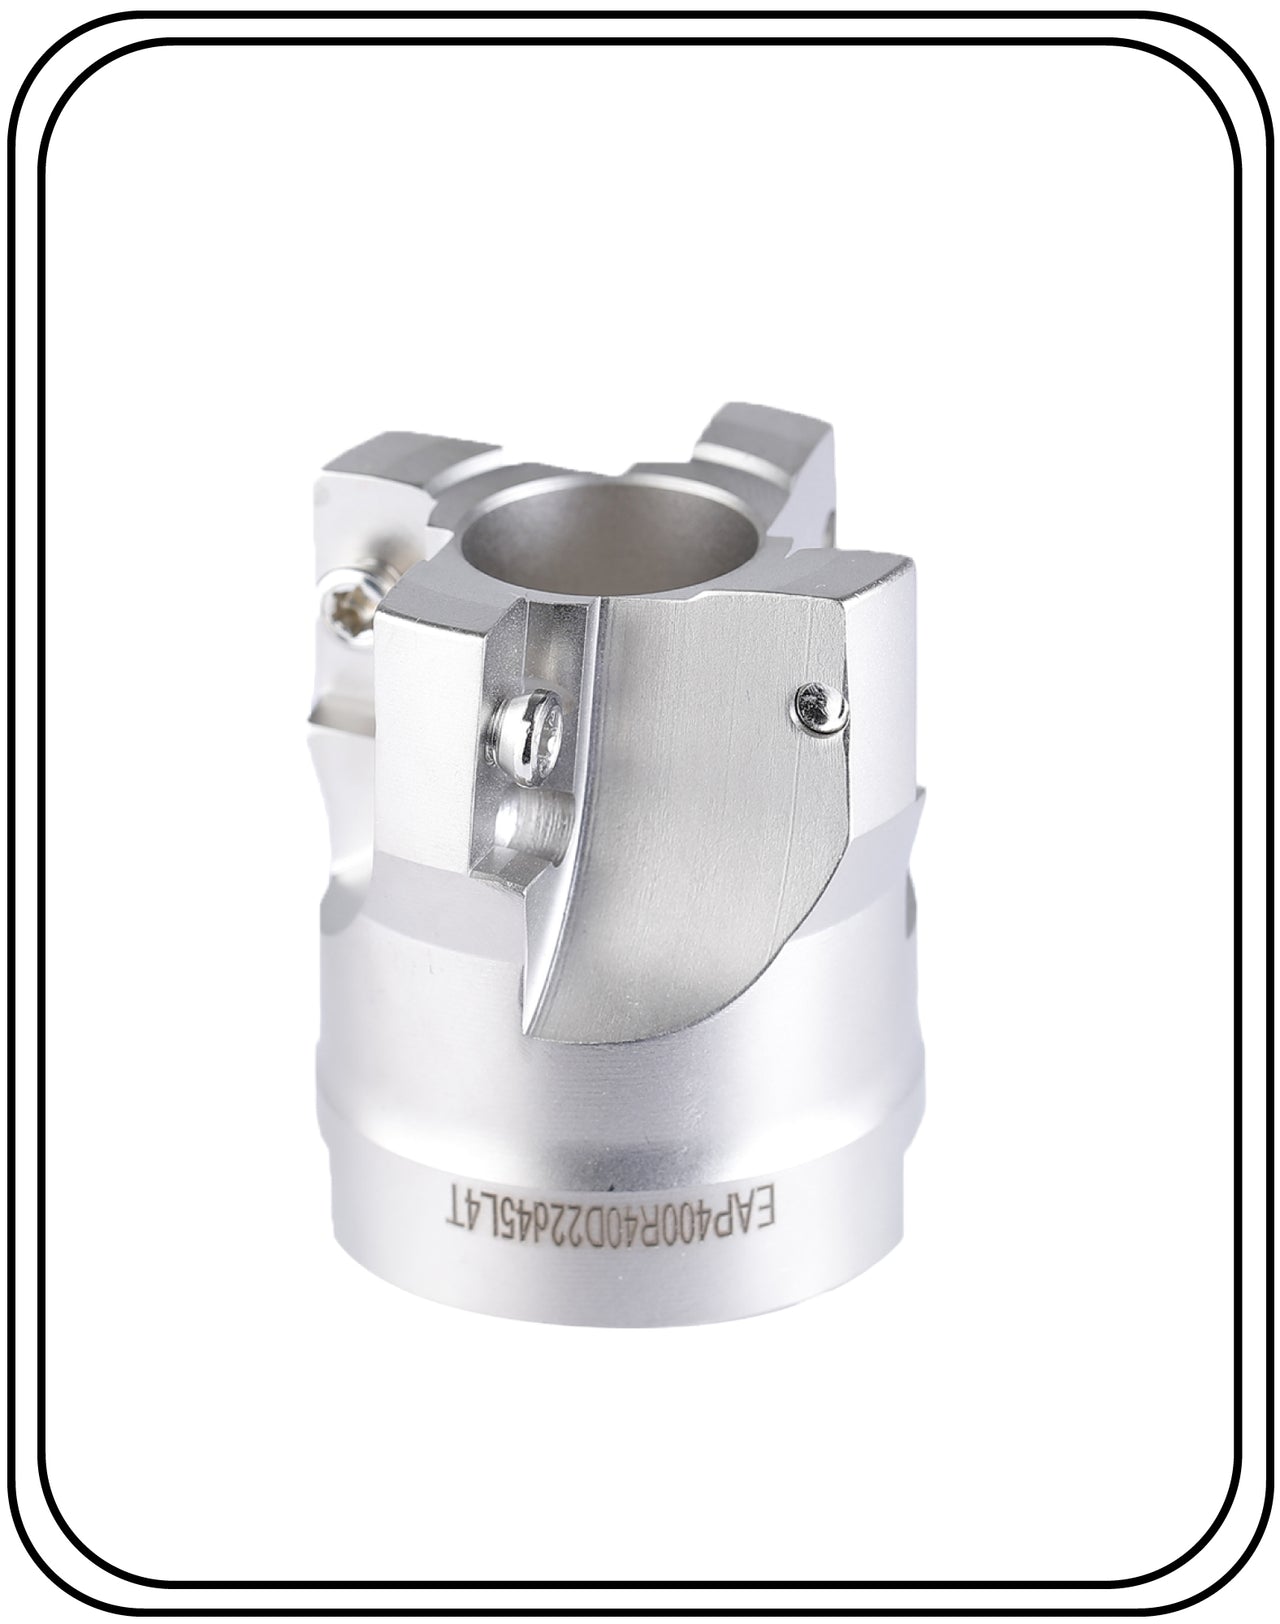 BAP400R-40-16/22-4T Face Milling Cutter